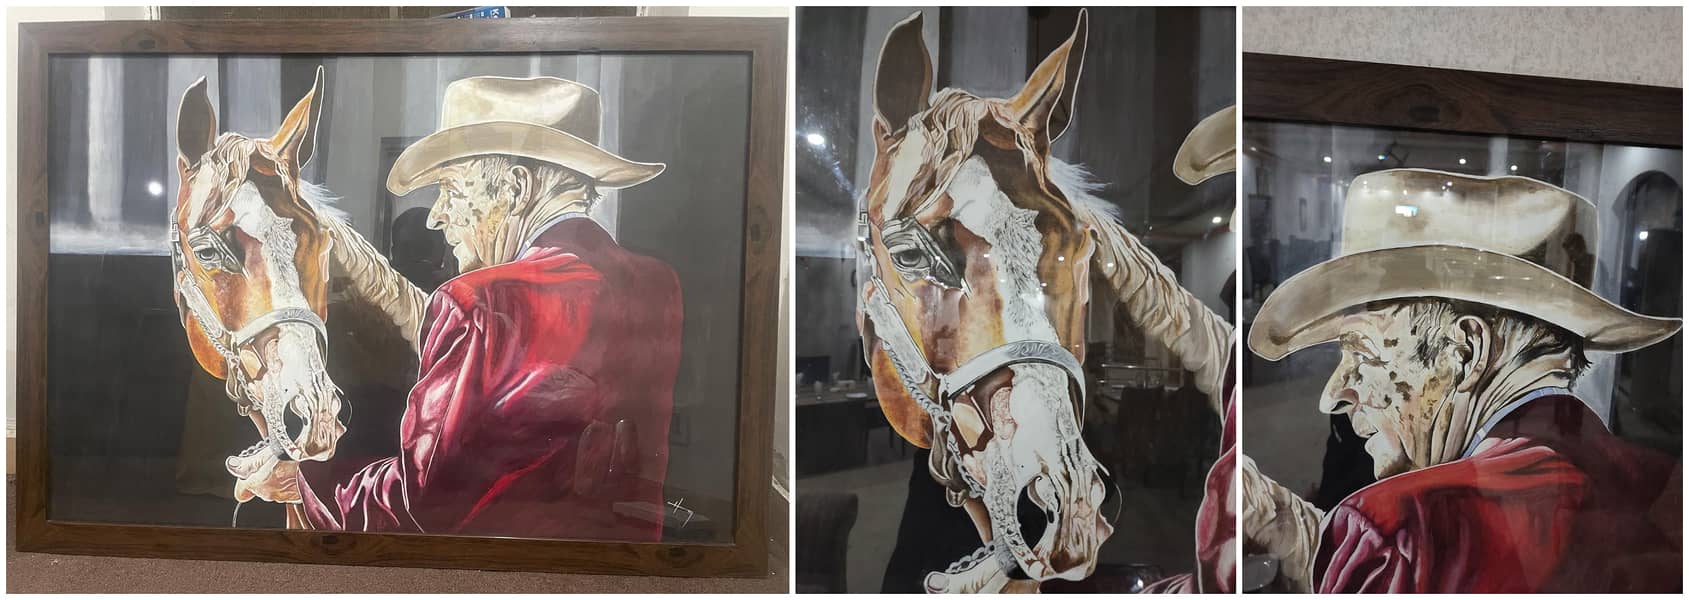 Handcrafted Canvas Portrait Capturing Man & Horse Bond" 3